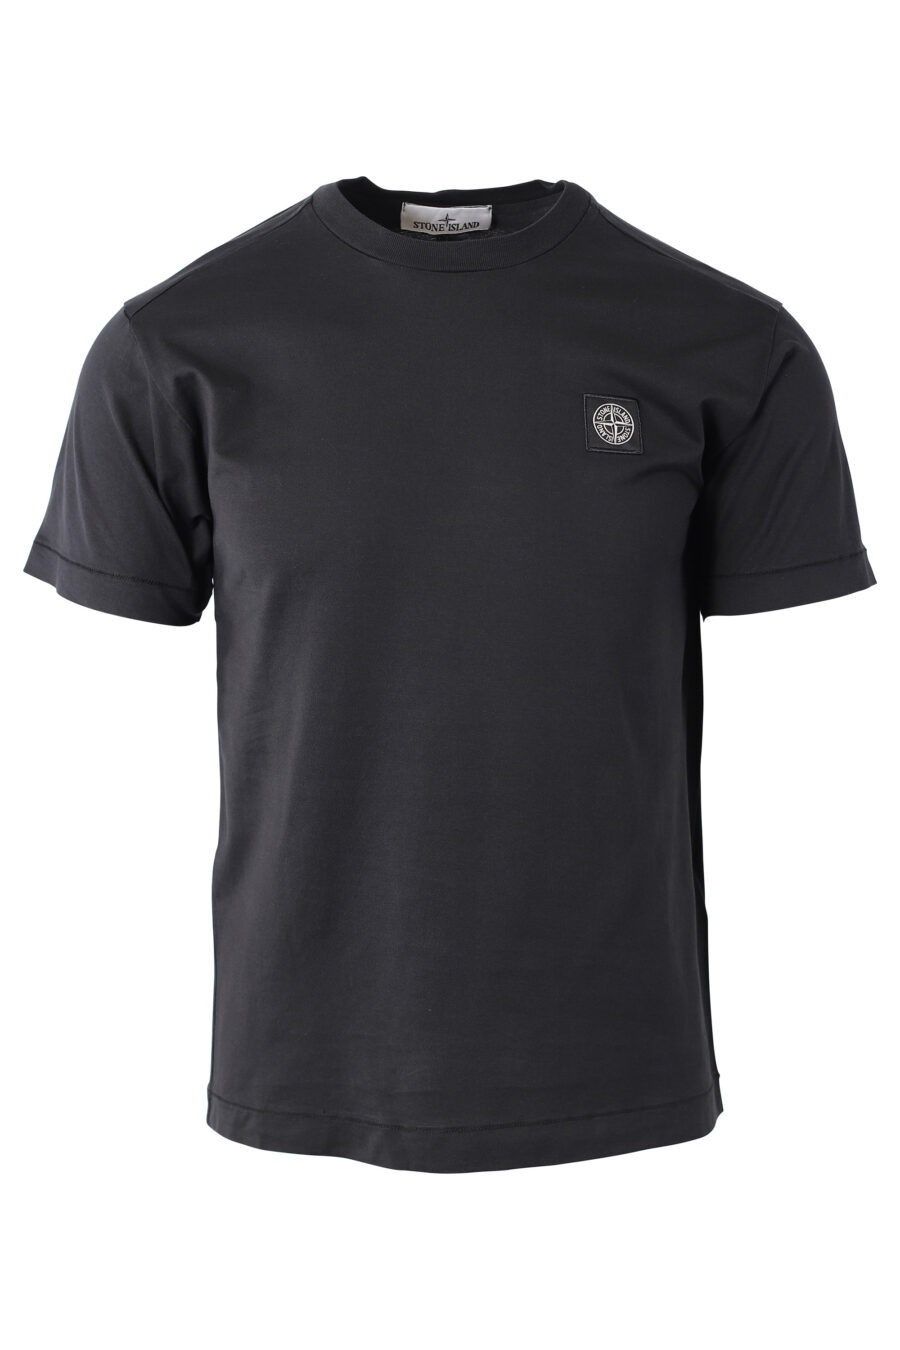 Schwarzes T-Shirt mit Mini-Logoaufnäher - IMG 1133